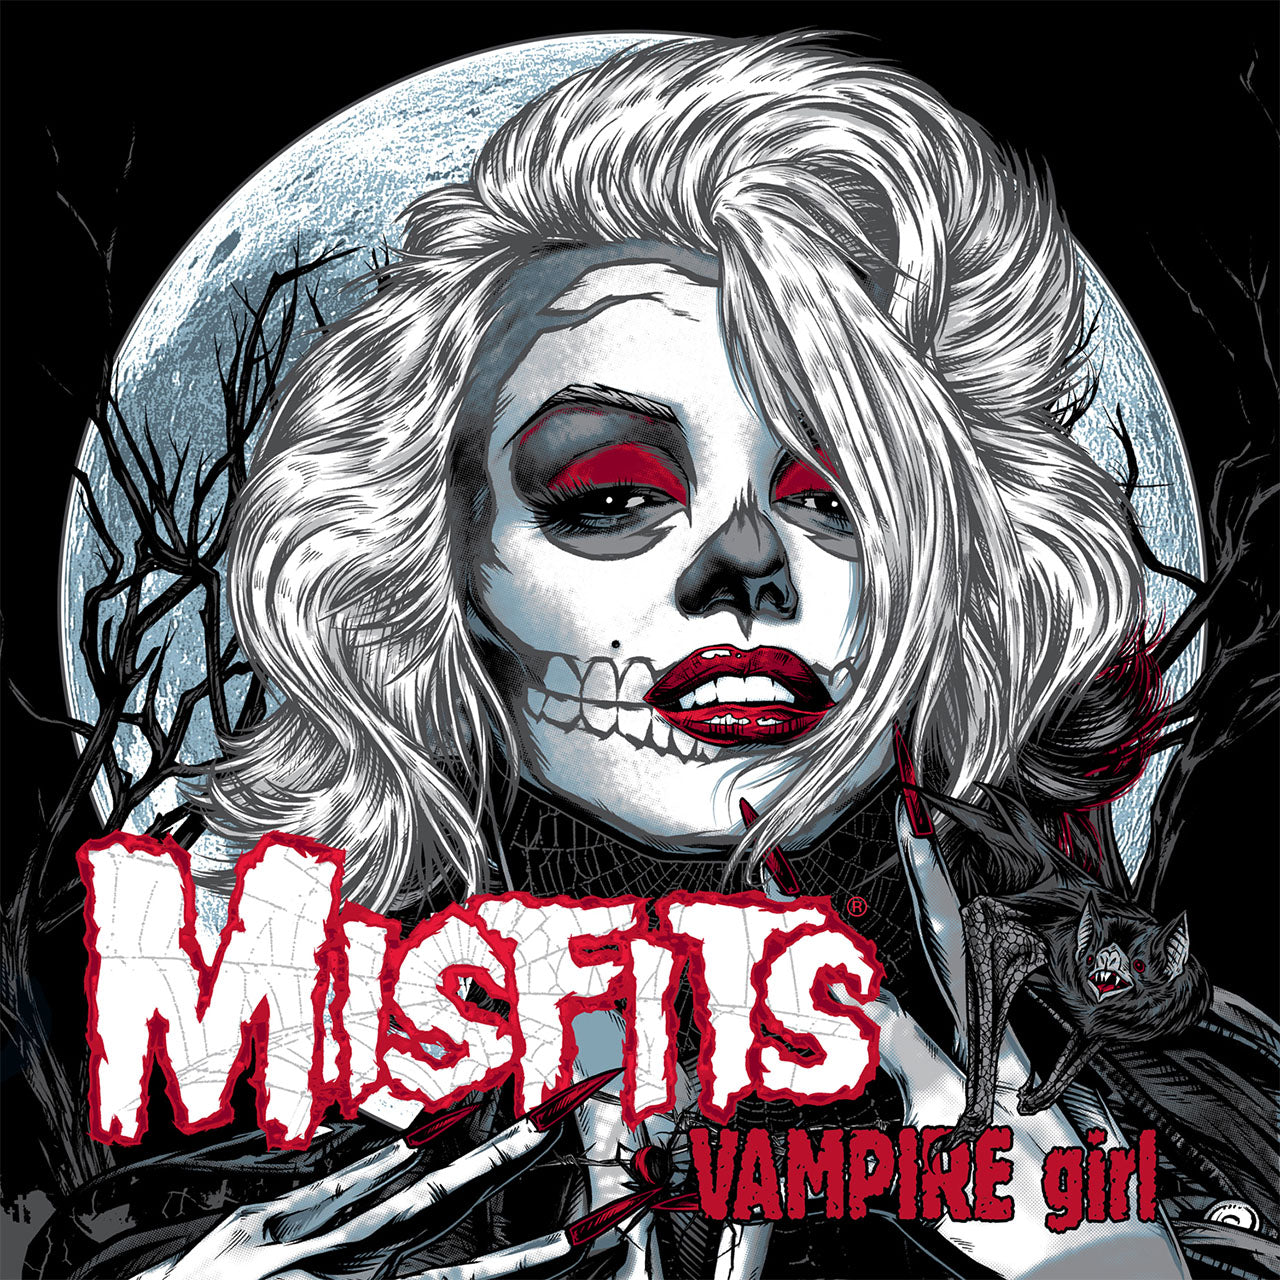 Misfits - Vampire Girl / Zombie Girl (Digipak CD)